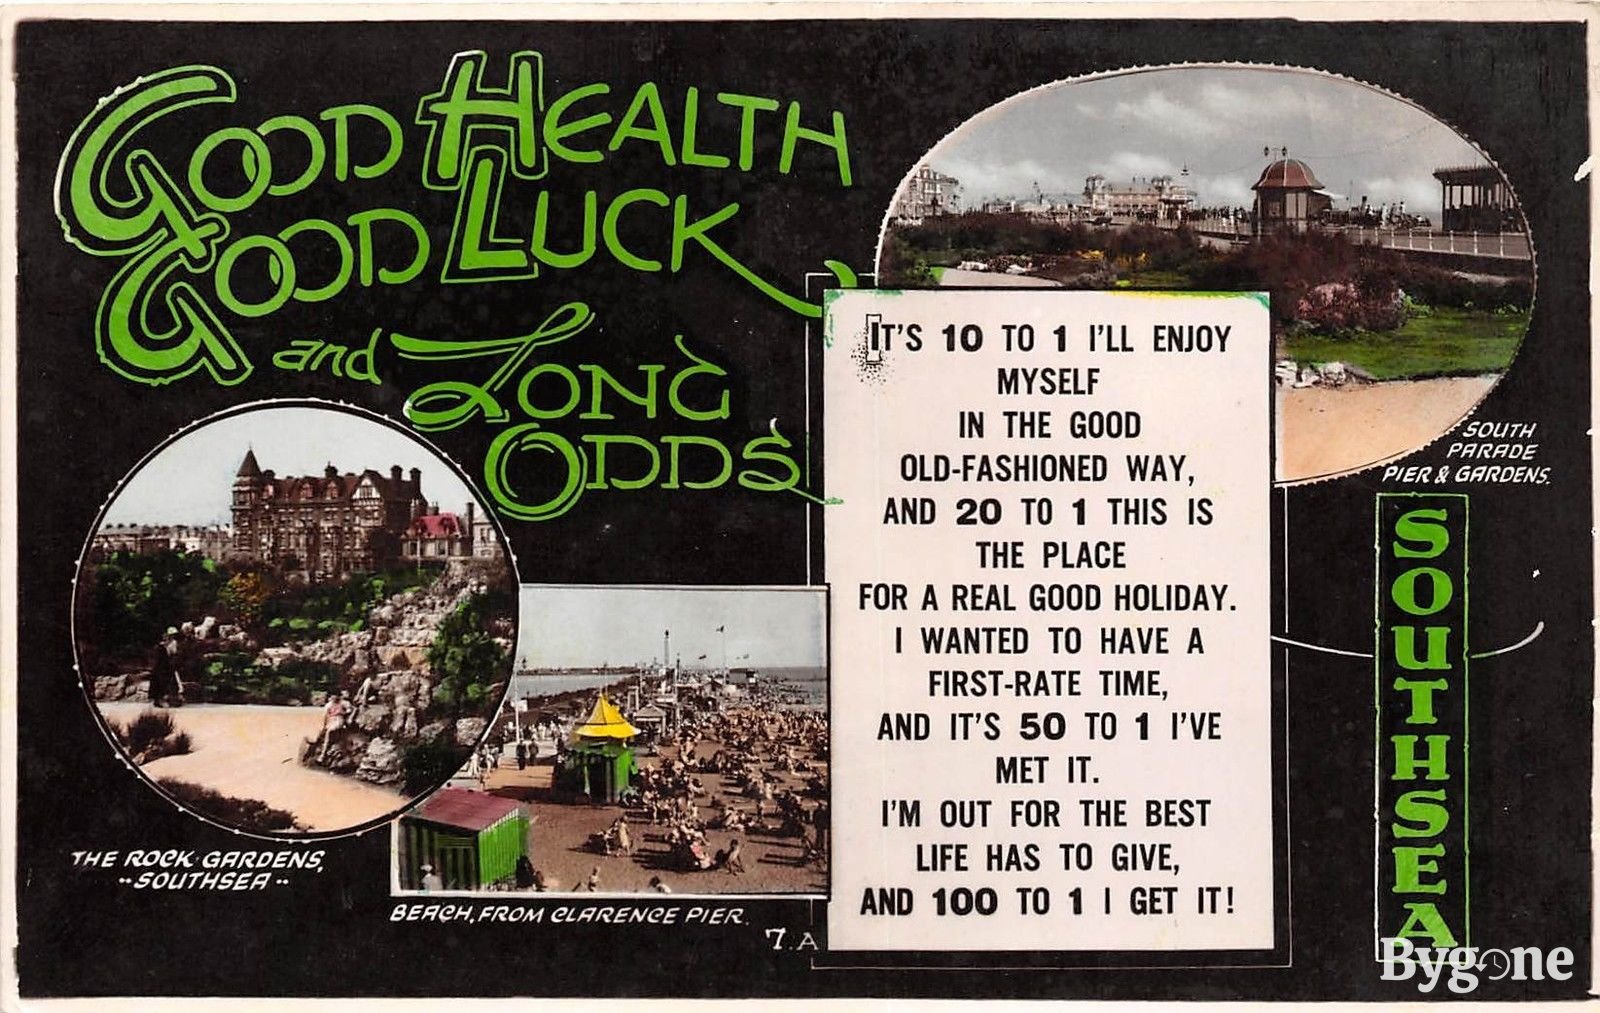 Good Health, Good Luck & Long Odds, Southsea Postcard